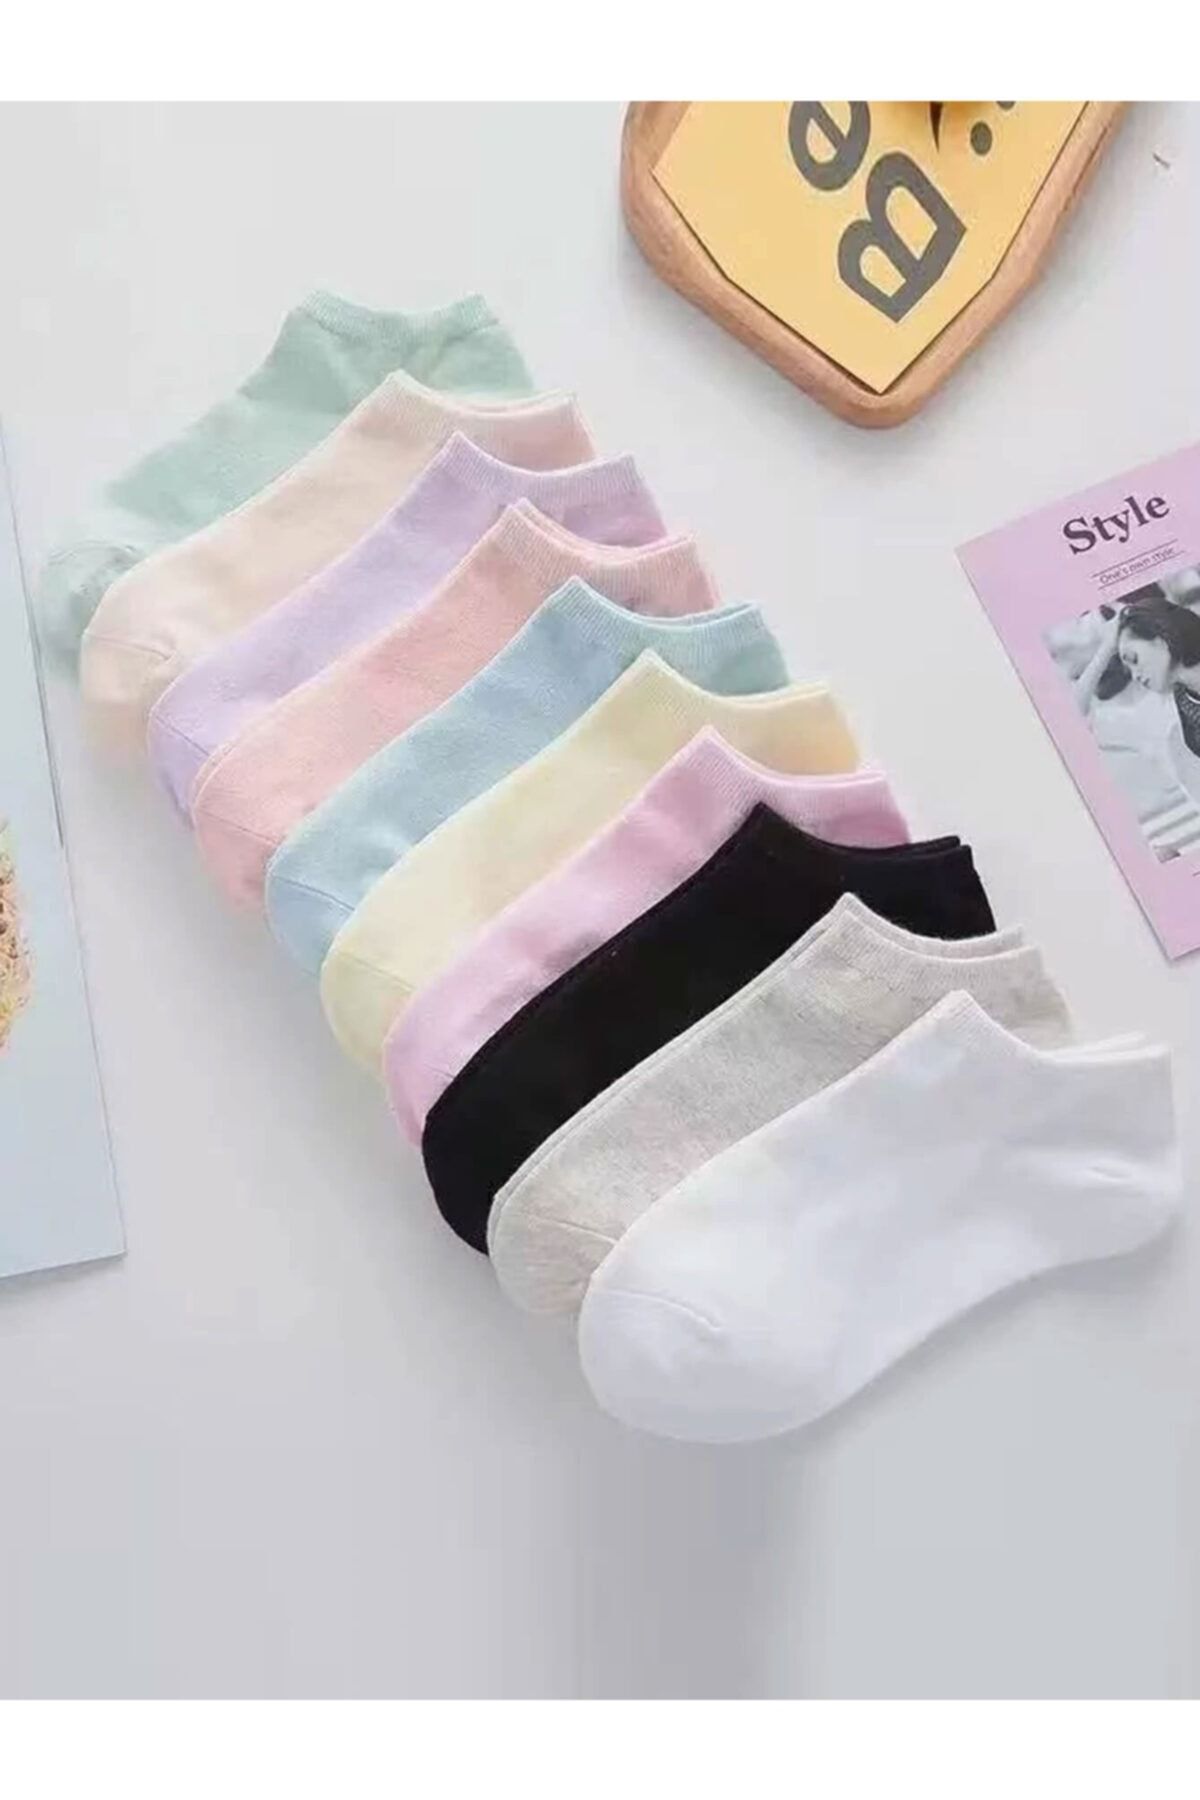 footmania 8”li Kadın Pastel Çok Renkli Çorap Seti